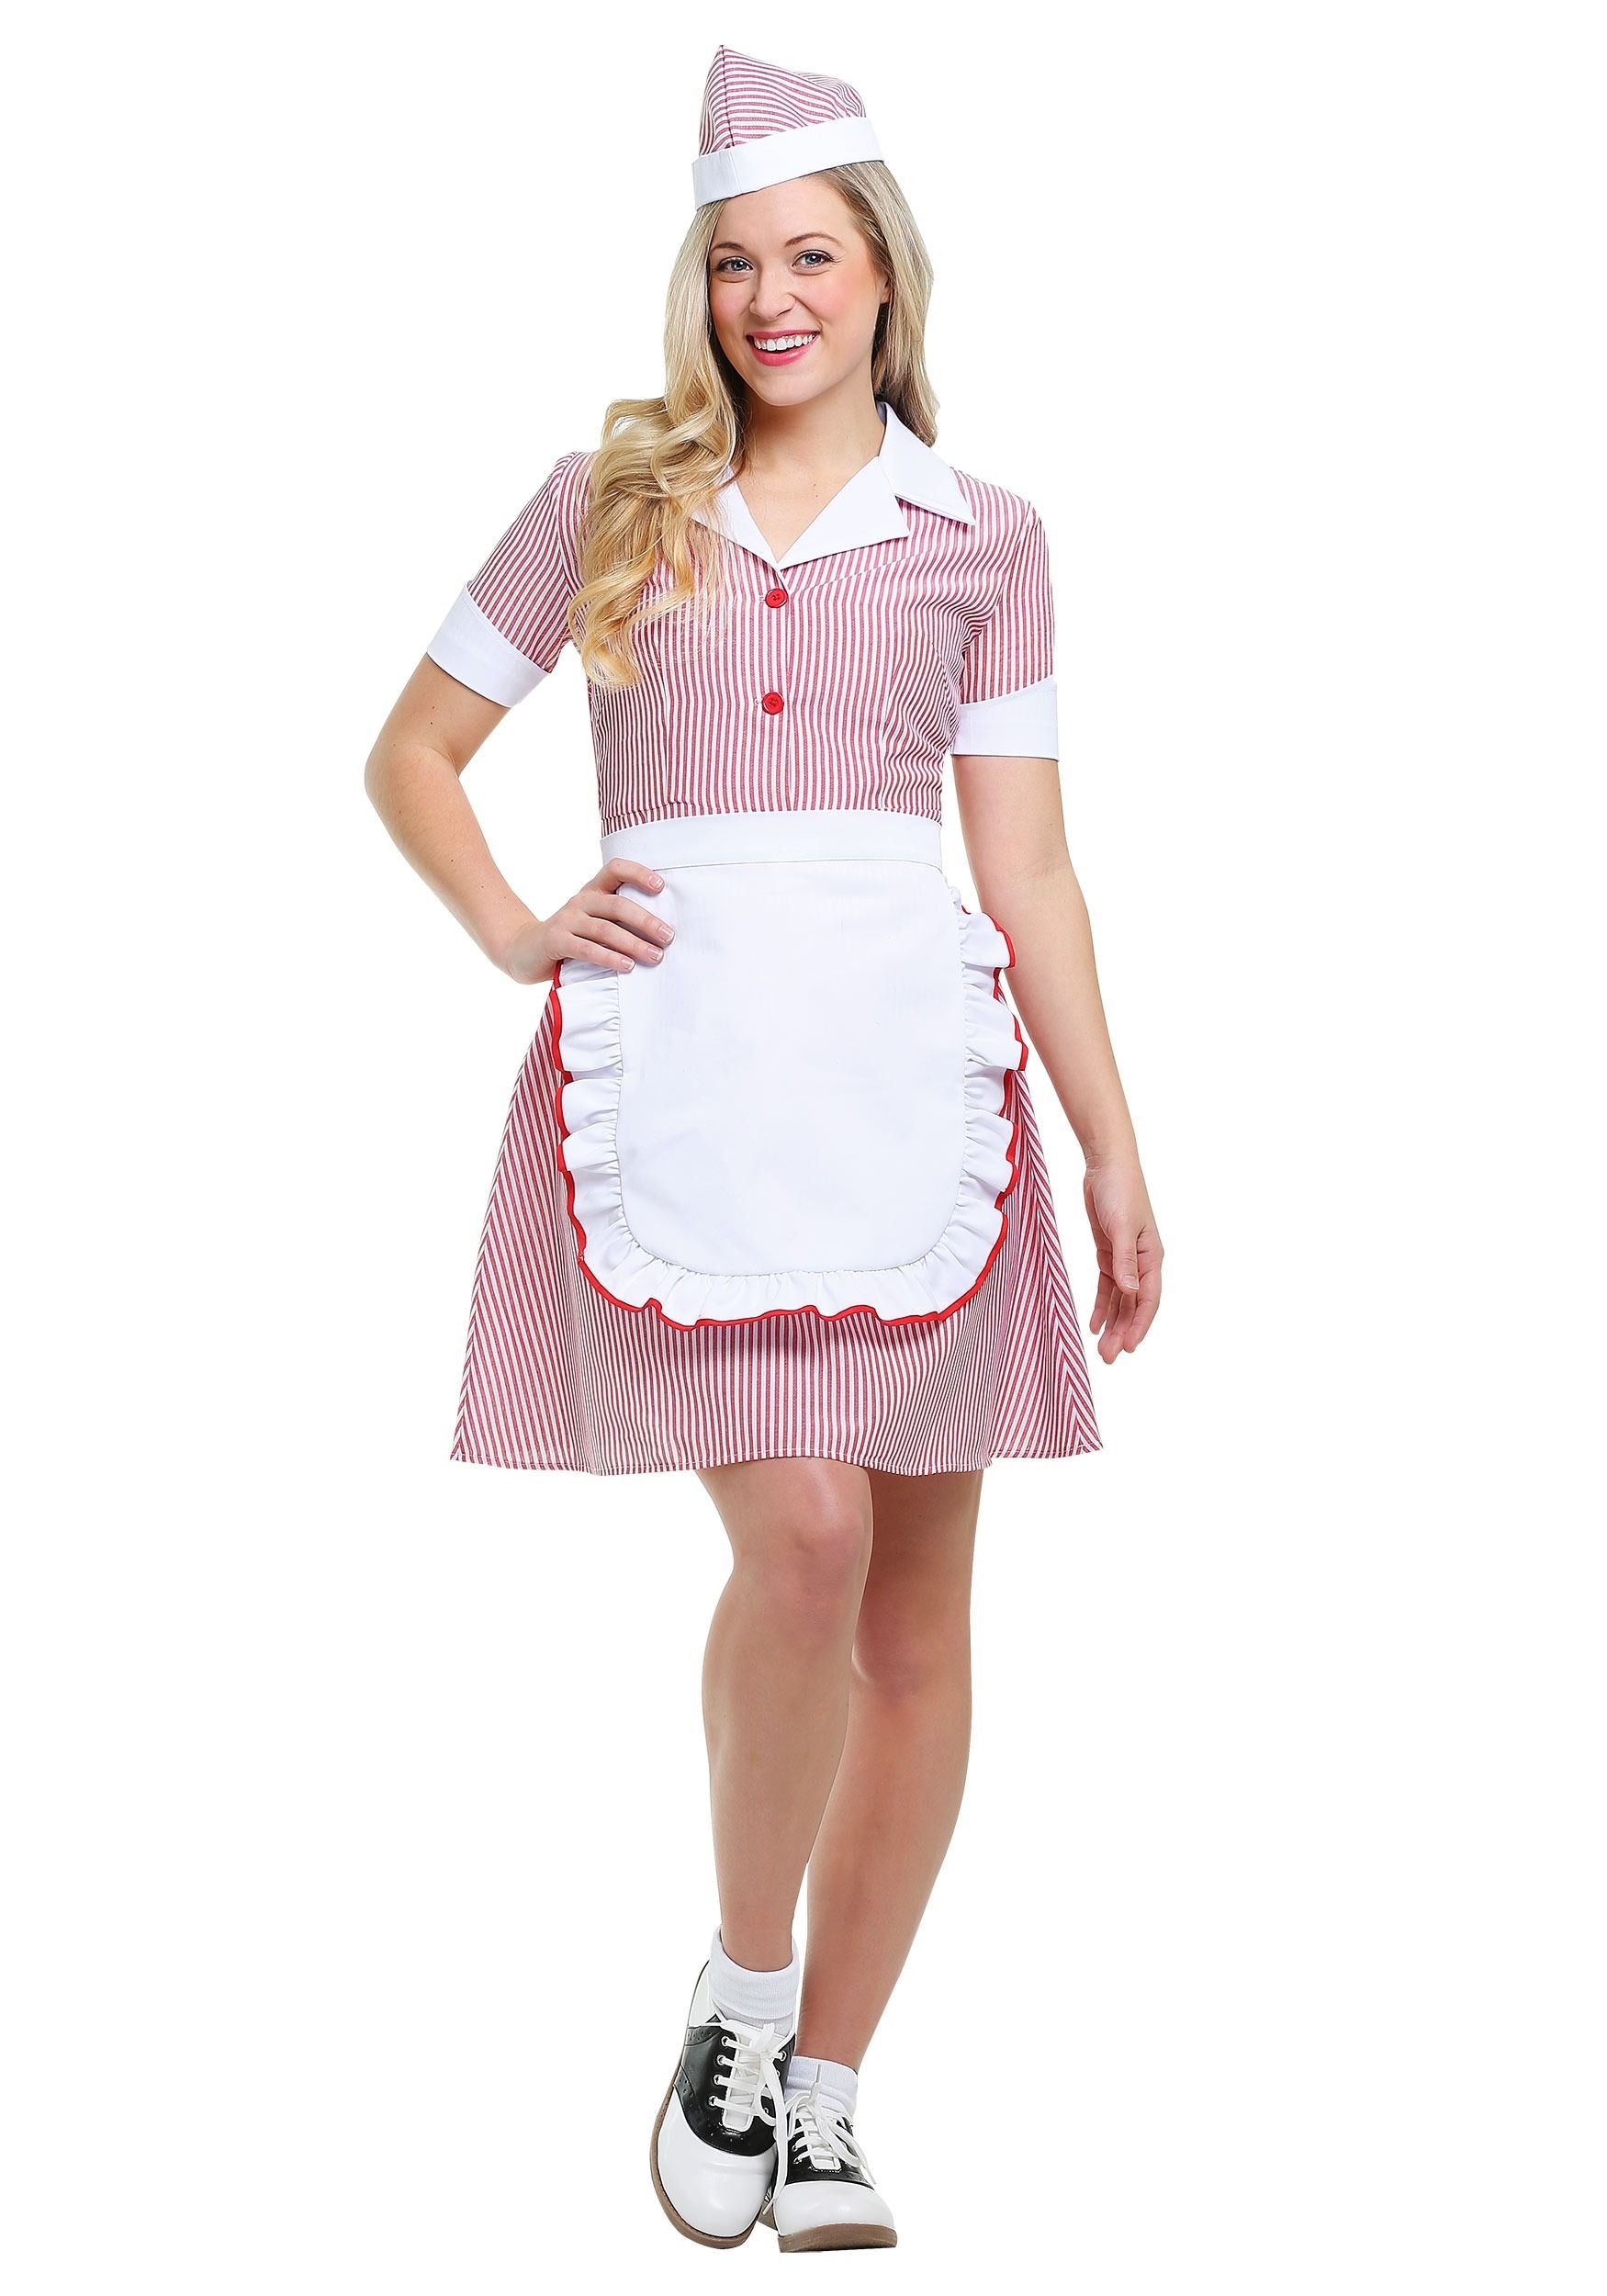 Soda Pop Girl Diner Retro Waitress Sock Hop Fancy Dress Halloween Adult Costume 